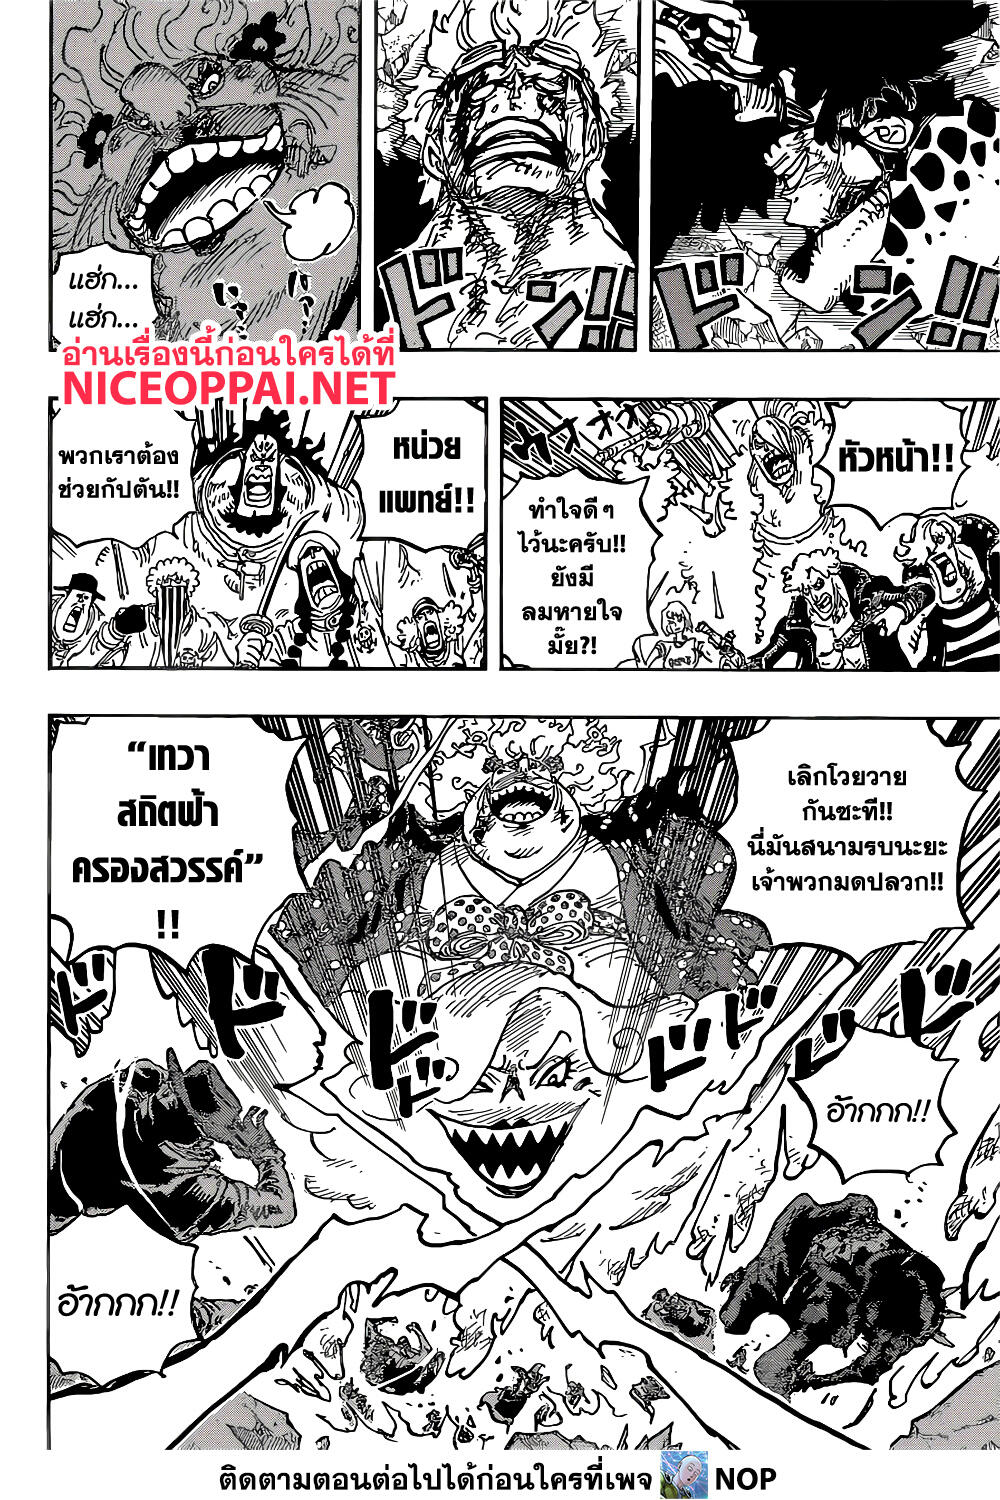 One Piece 1038 TH